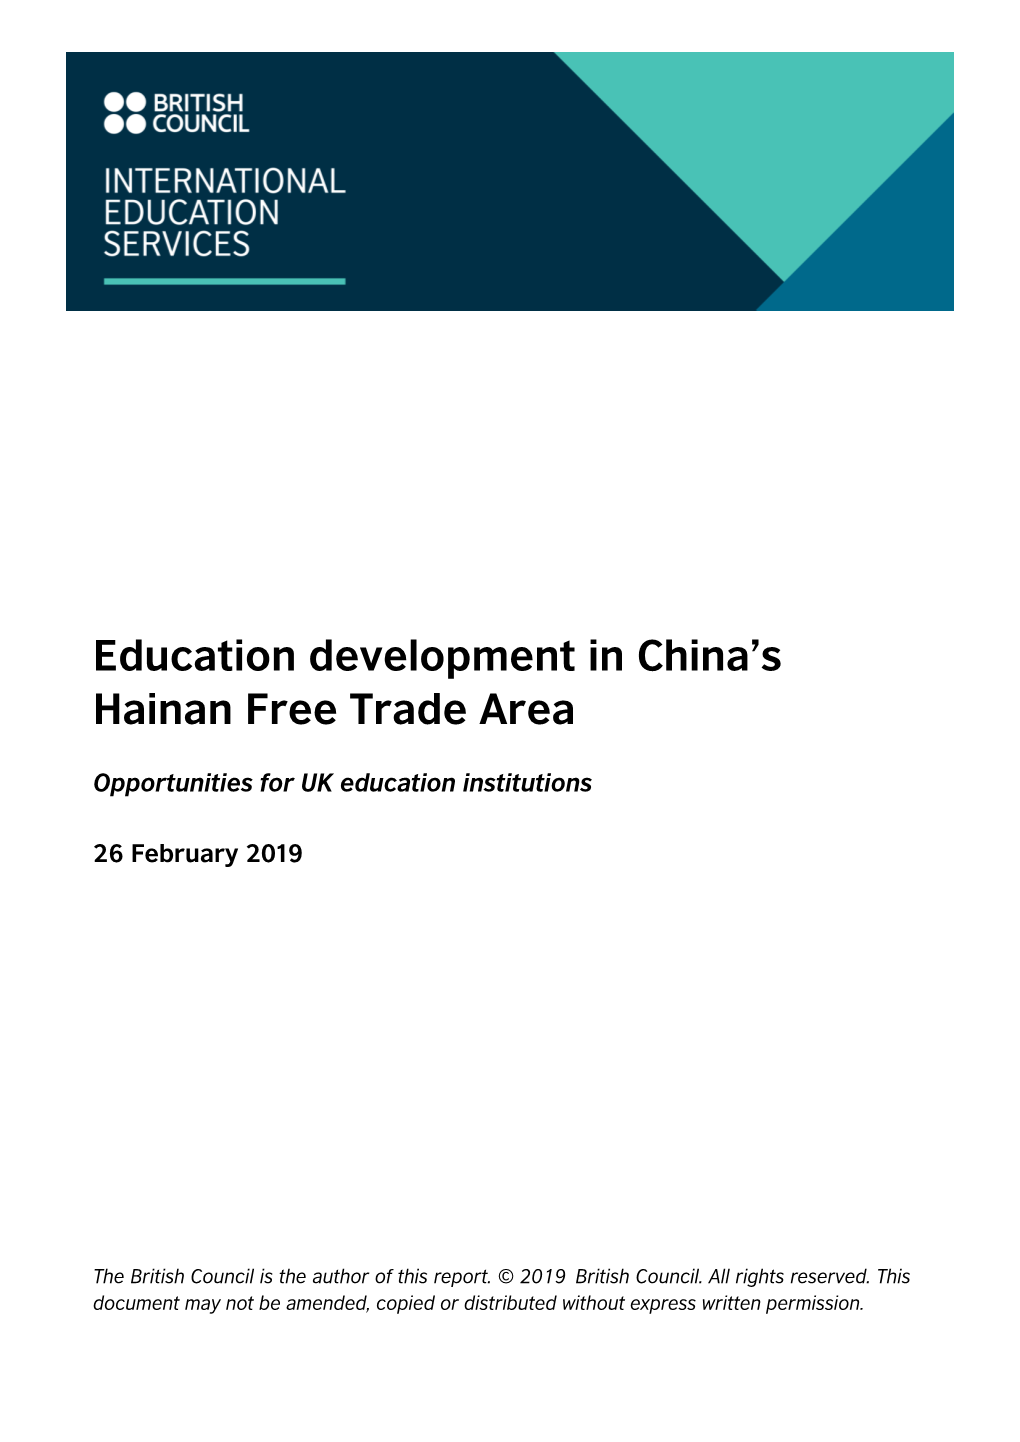 Education Development in China's Hainan Free Trade Area